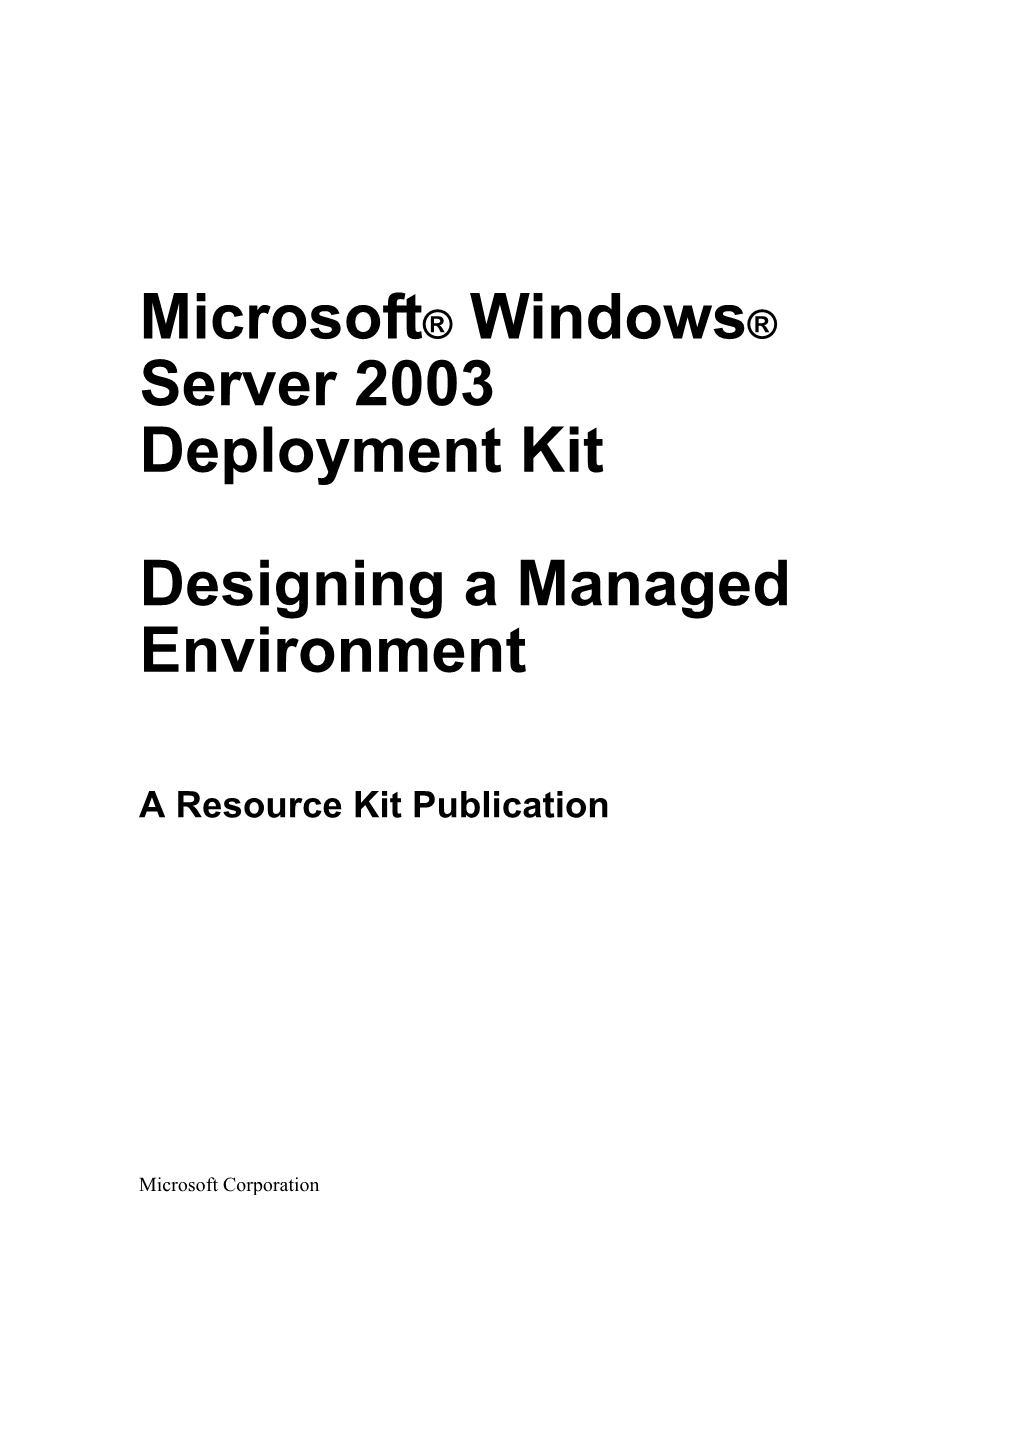 Microsoft® Windows® Server 2003 Deployment Kit Designing A